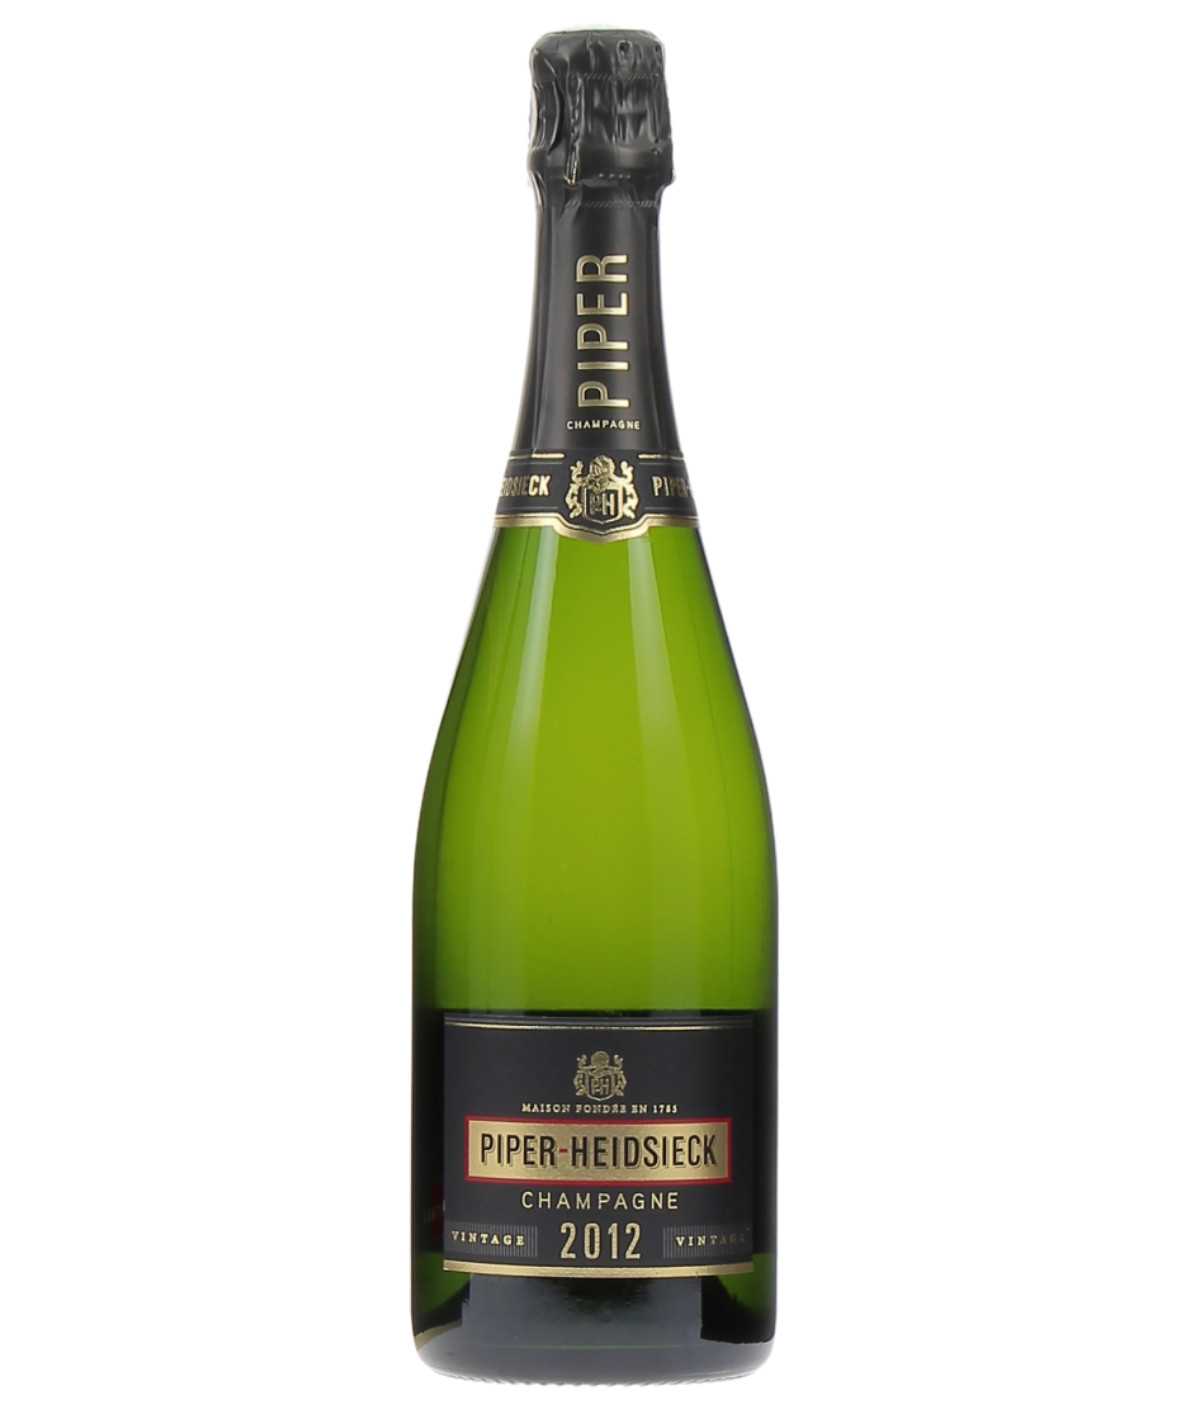 PIPER-HEIDSIECK Champagne Vintage 2012